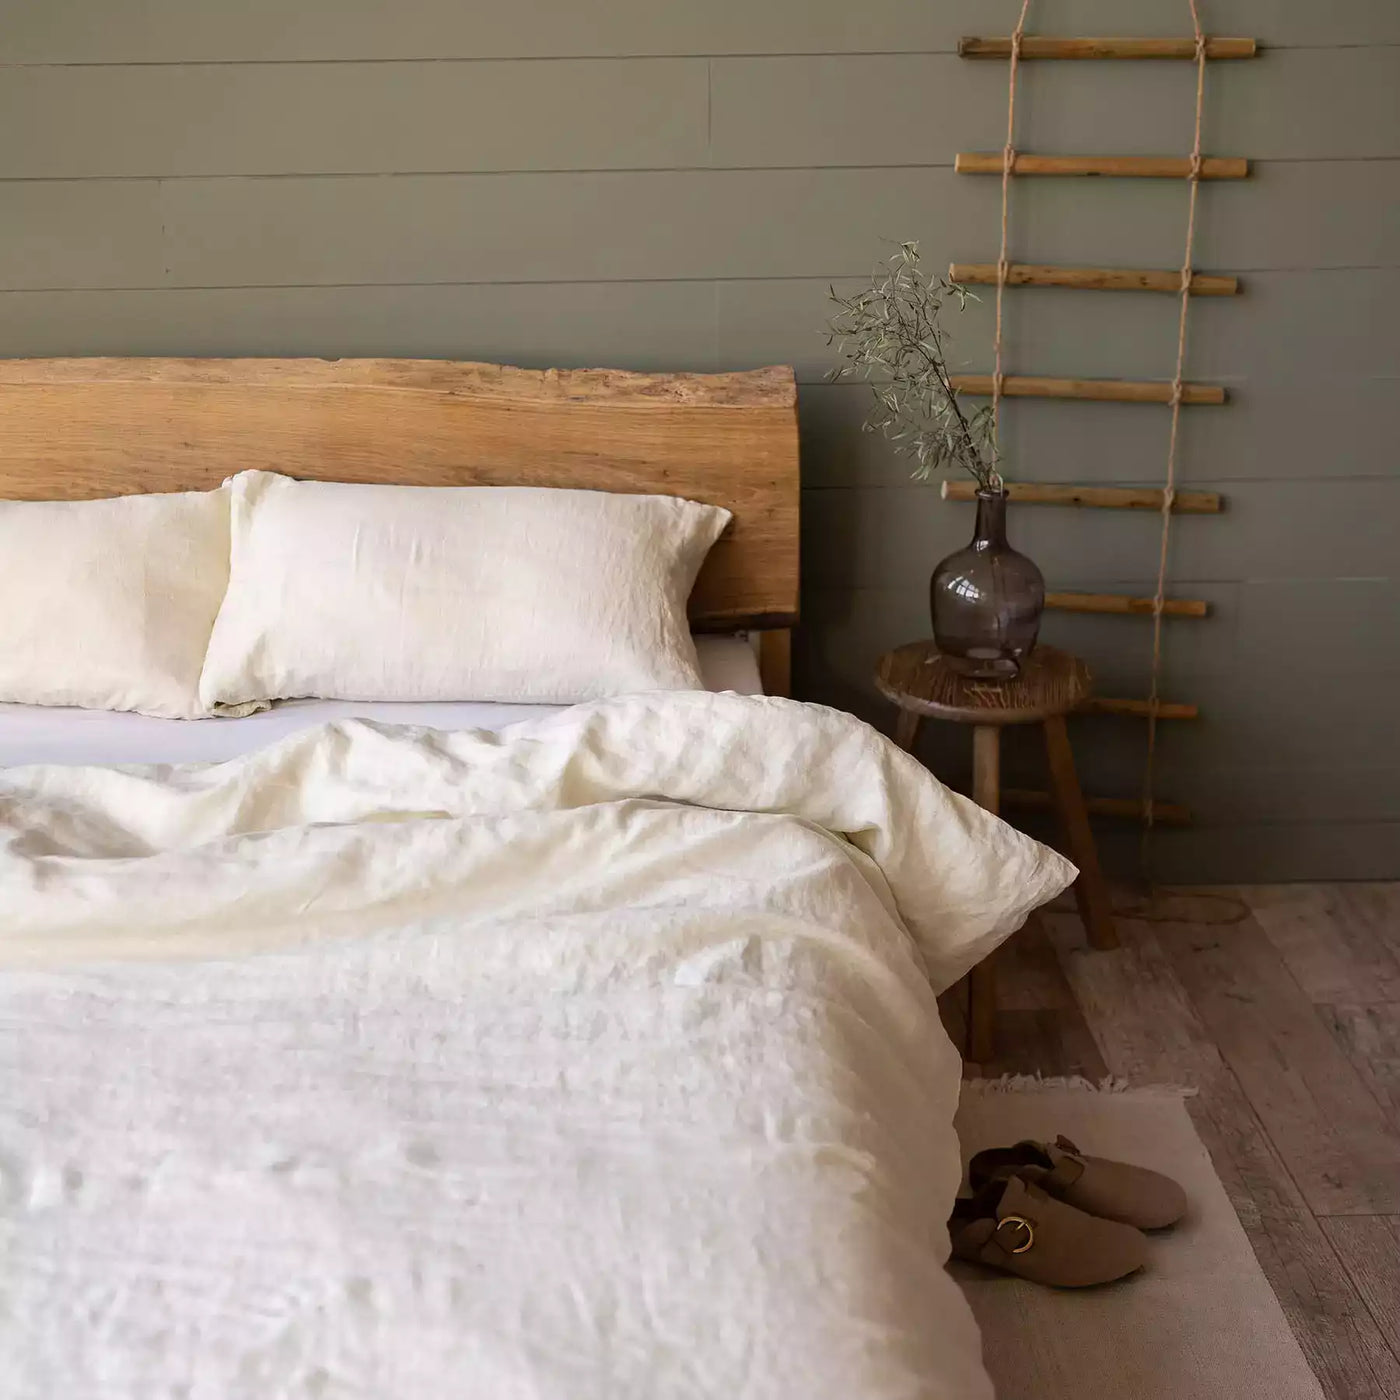 Linen bedding set 155x200 in Vanilla cream